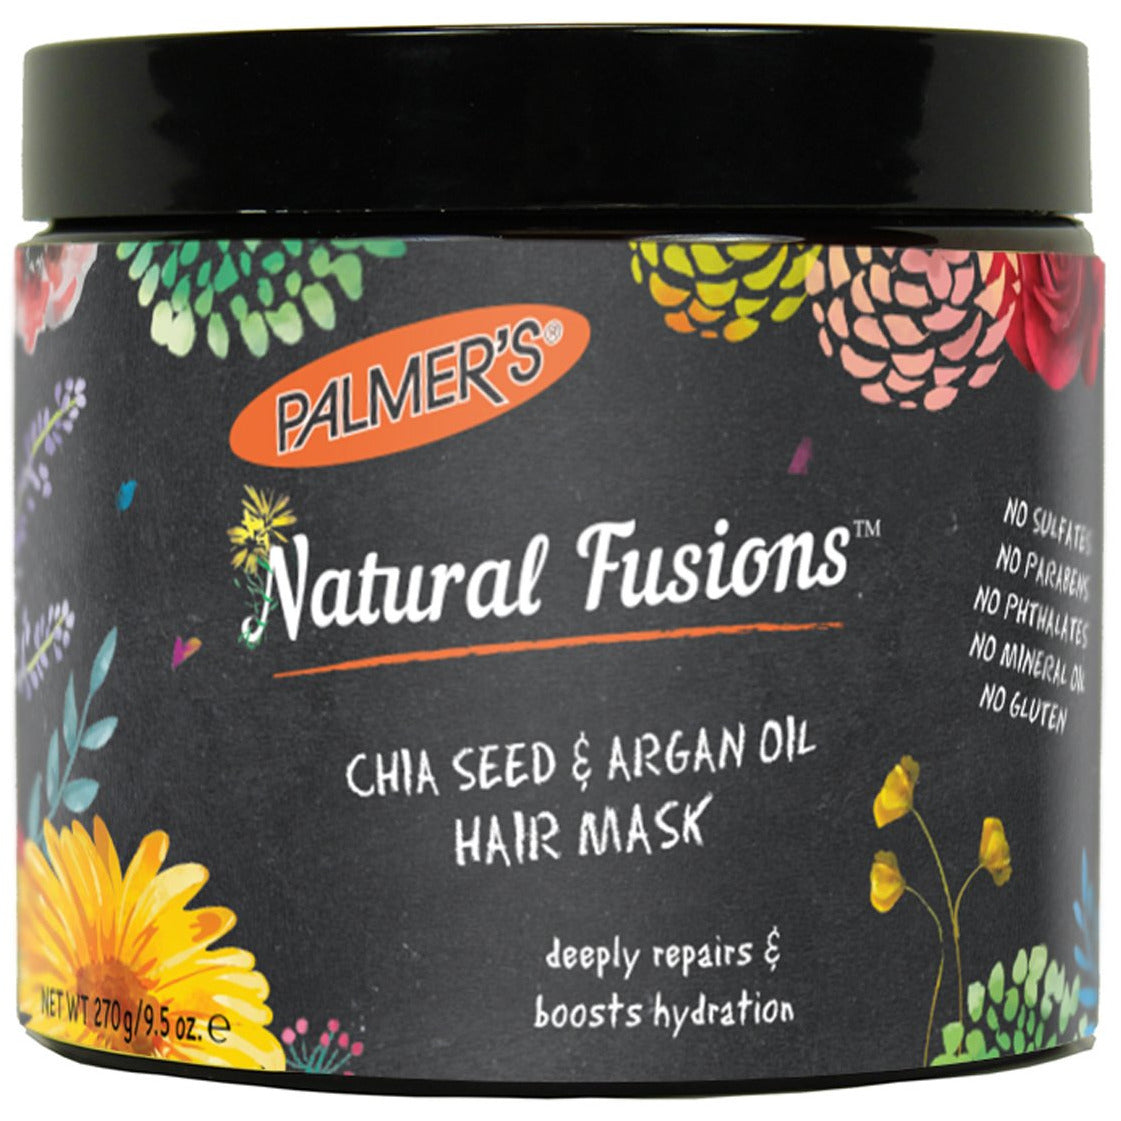 Palmer's Natural Fusions Chia Seed & Argan Oil Hair Mask 9.5 oz - 4th Ave Market